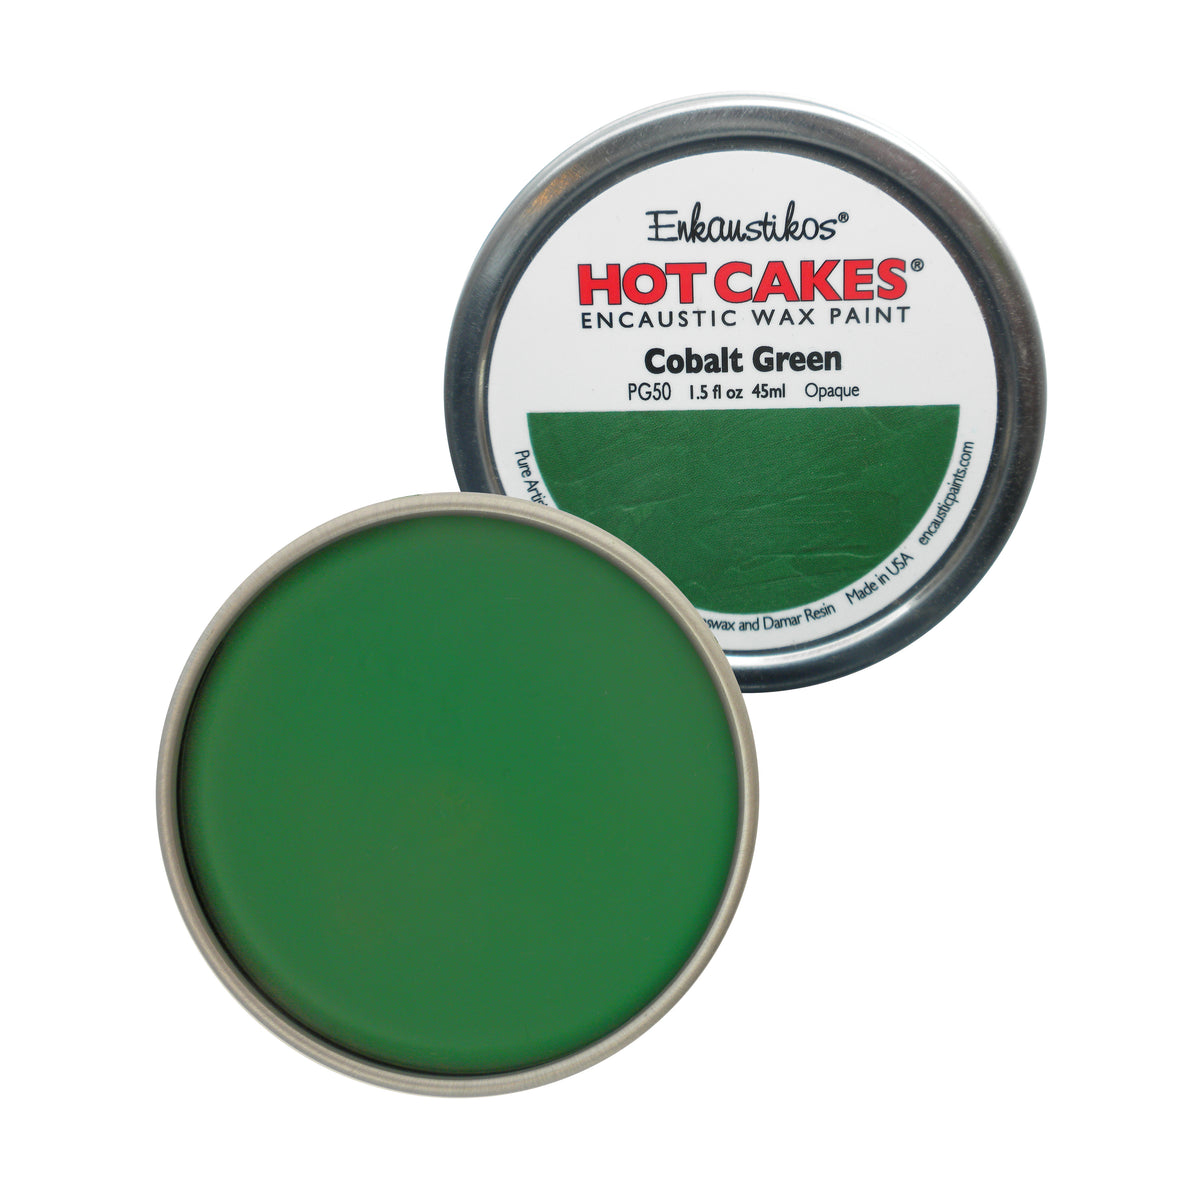 Cobalt Green Hot Cakes